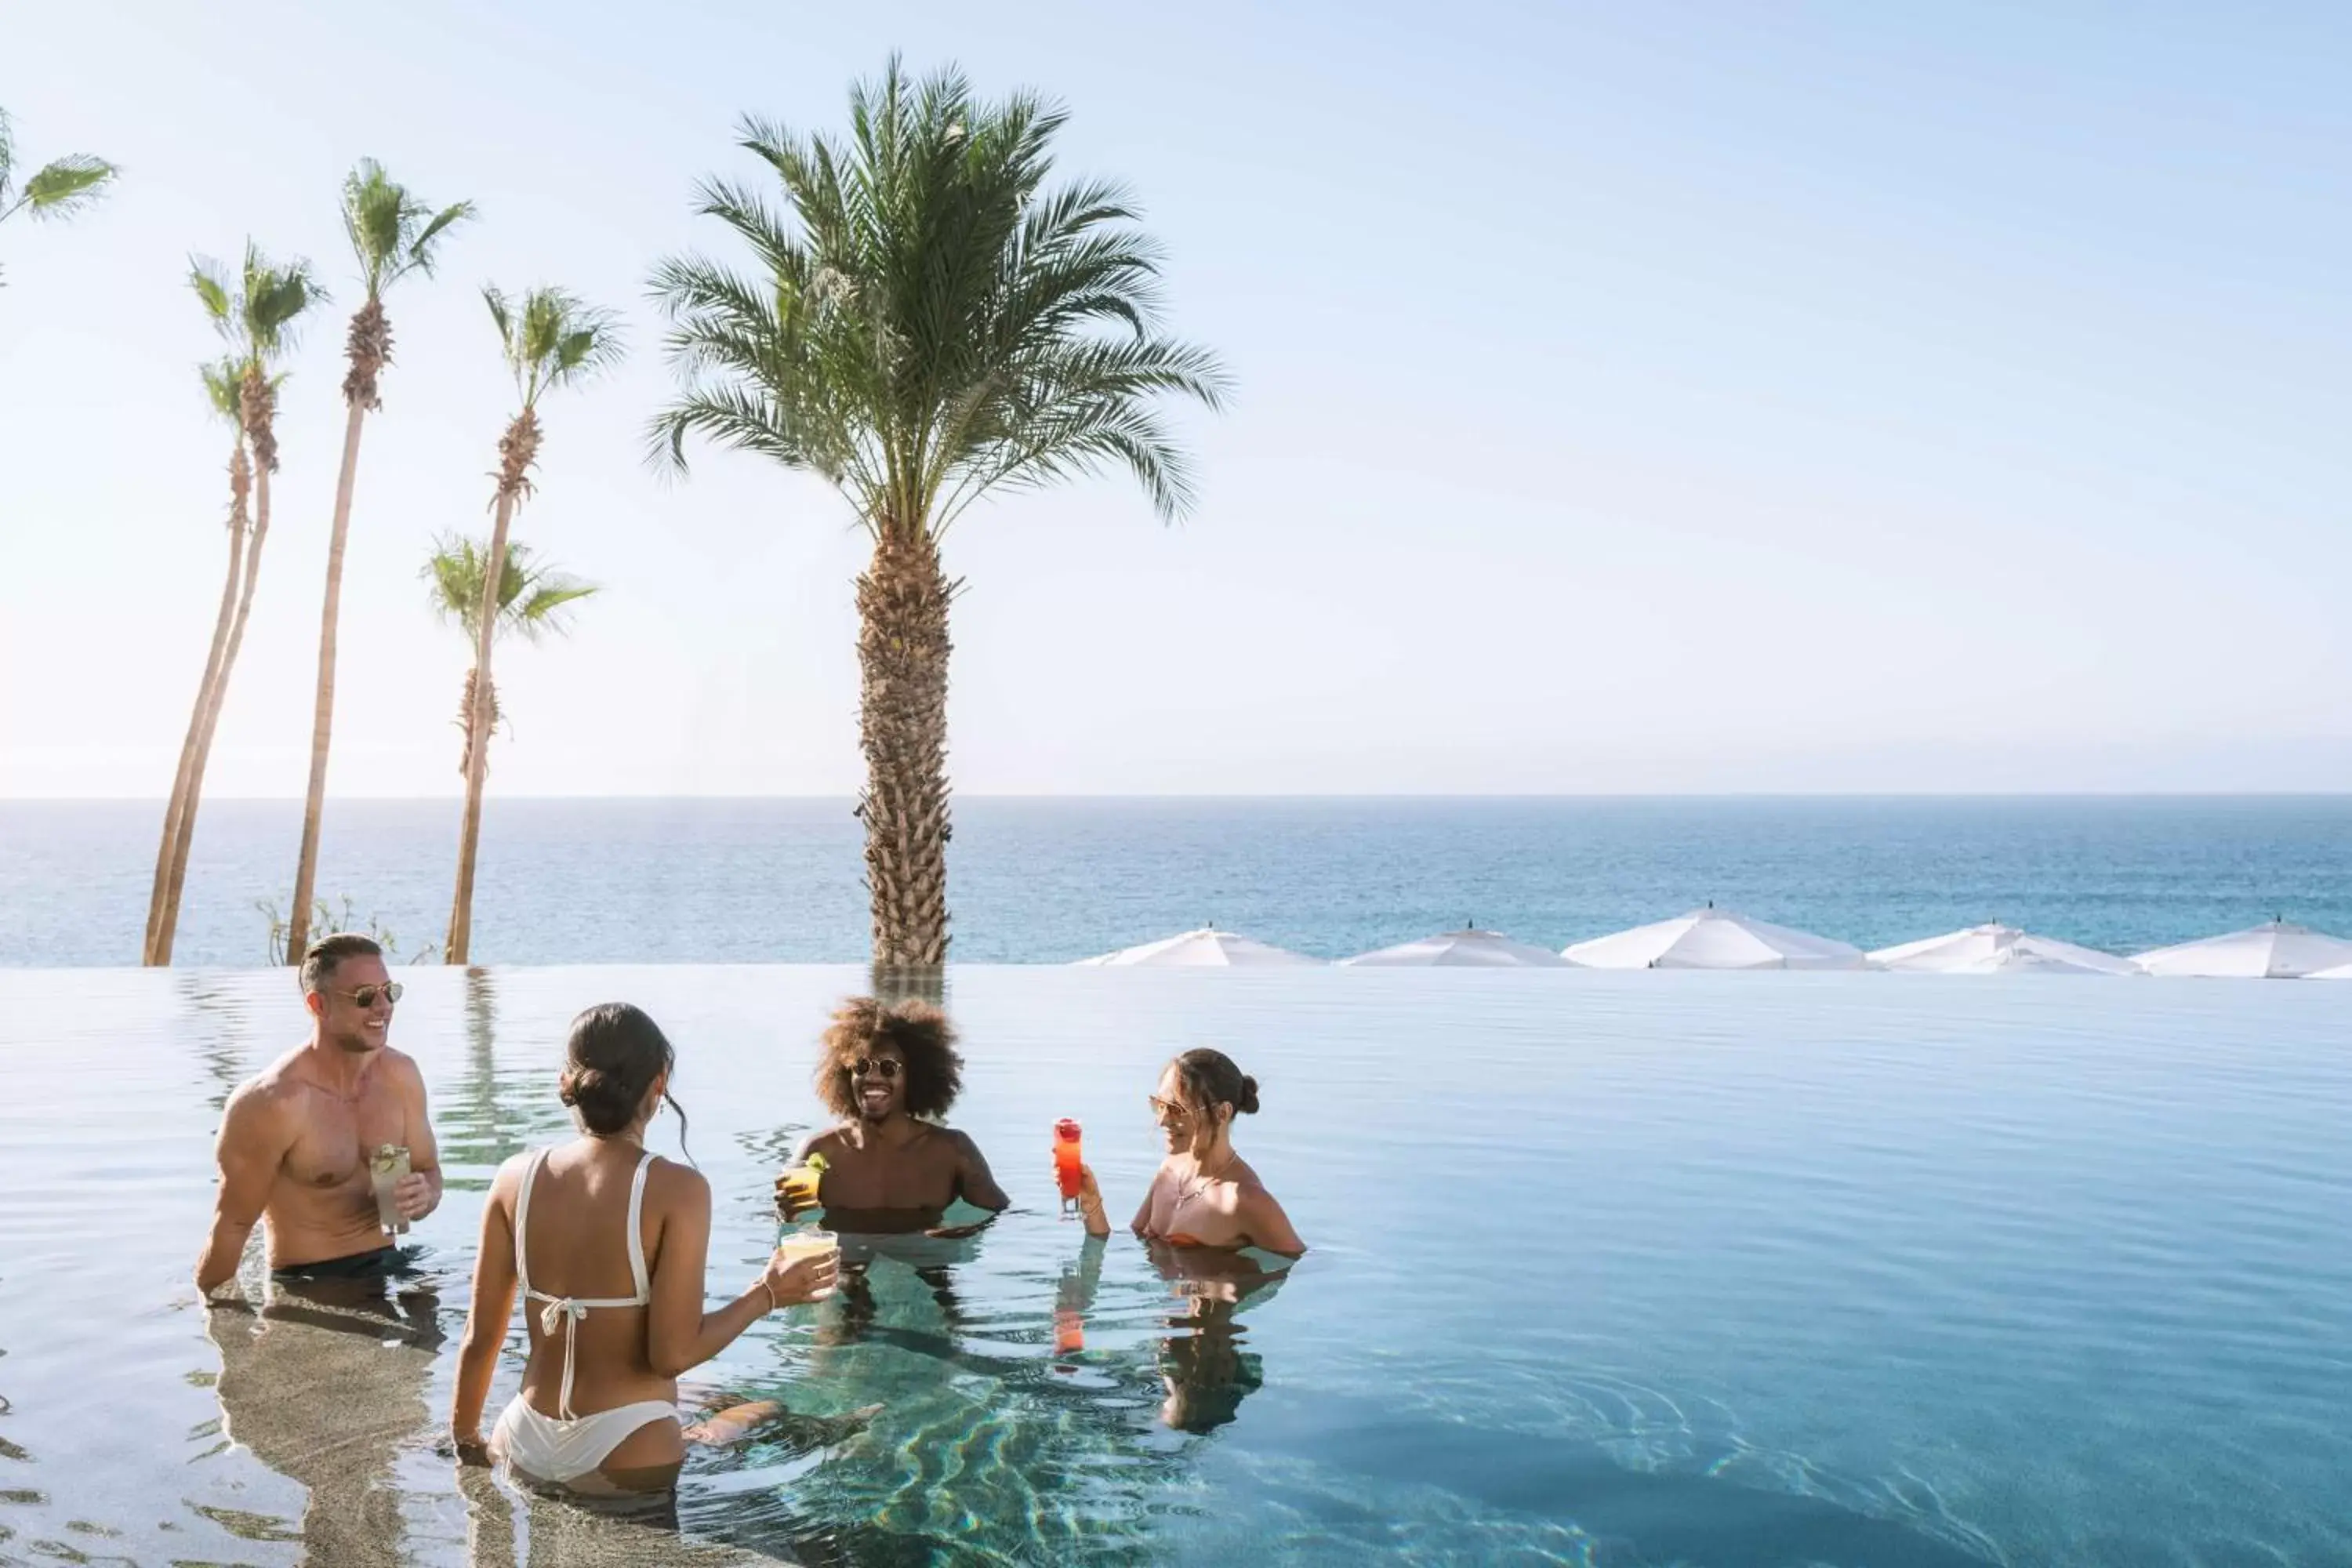 Pool view in Hilton Los Cabos